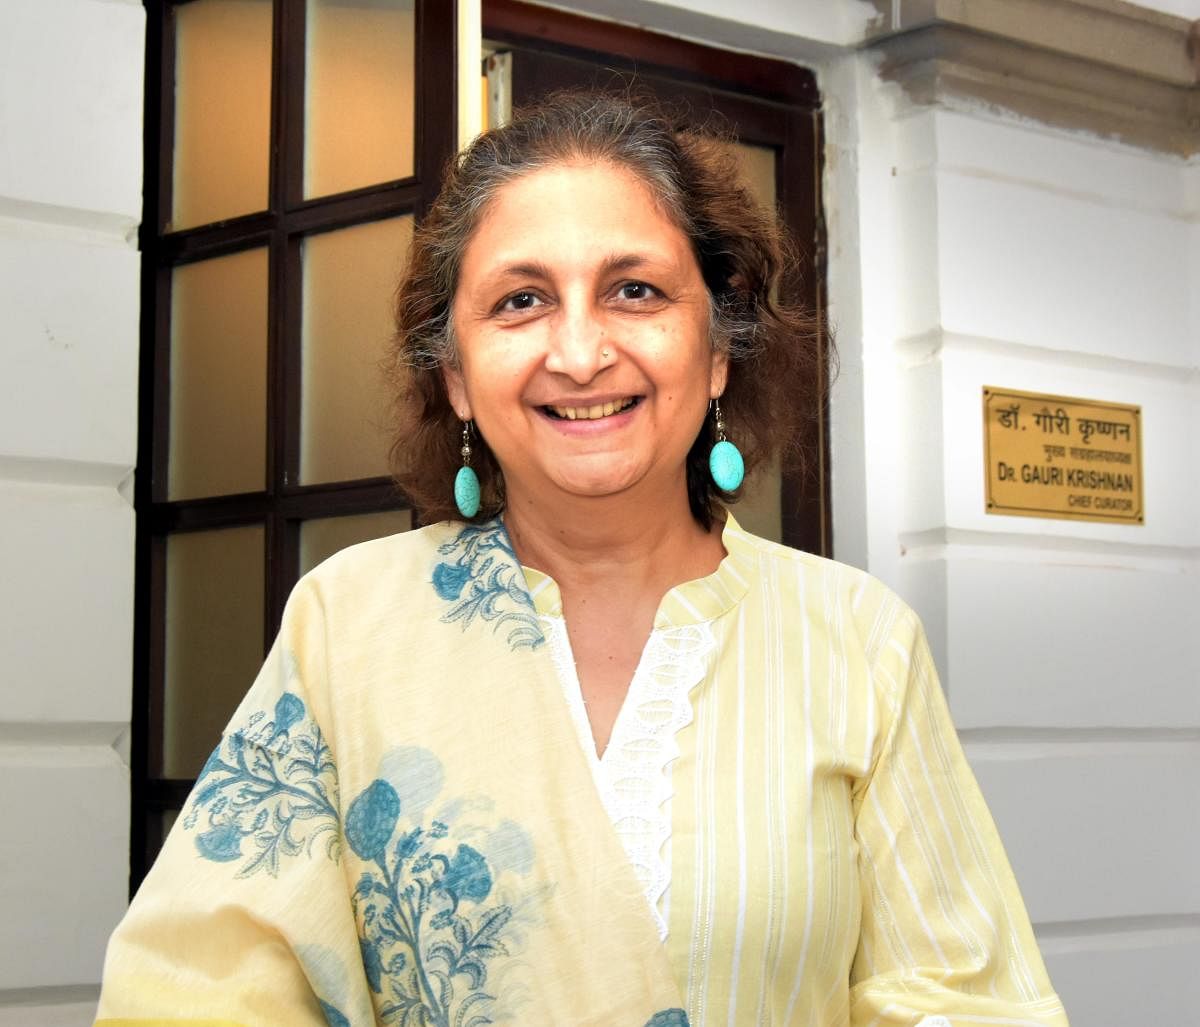 Gauri Krishnan, chief curator